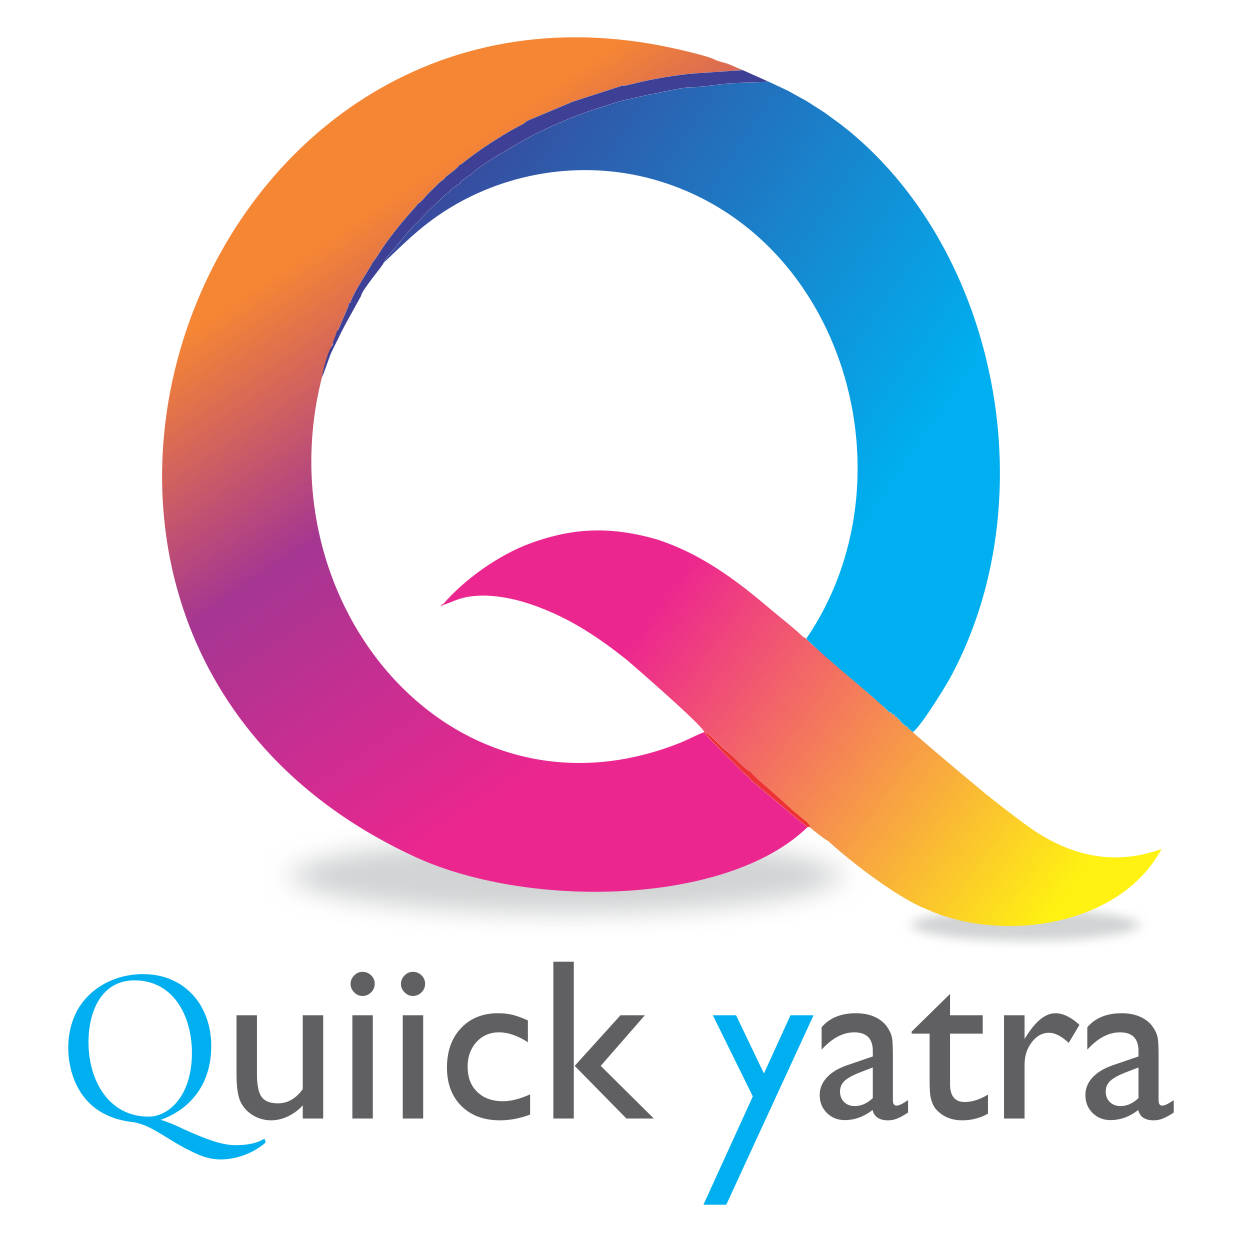 Quiick Yatra